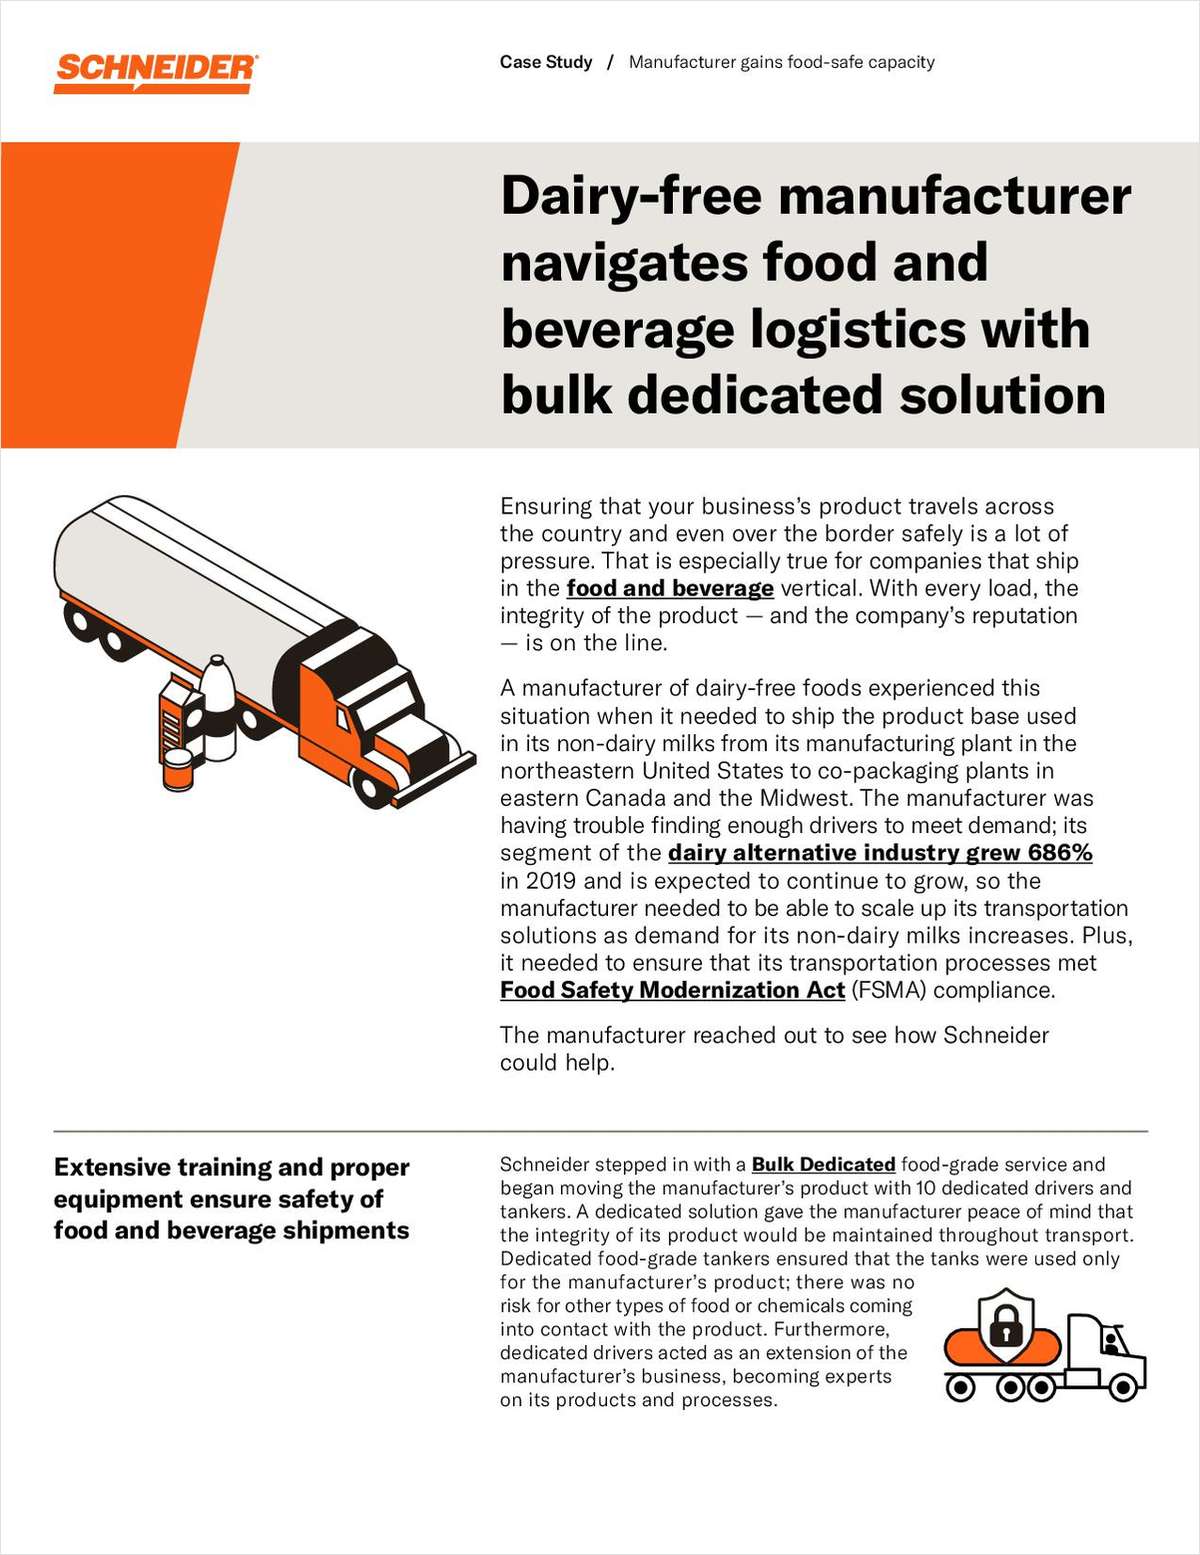 Dairy-free Manufacturer Navigates Food and Beverage Logistics with Bulk Dedicated Solution